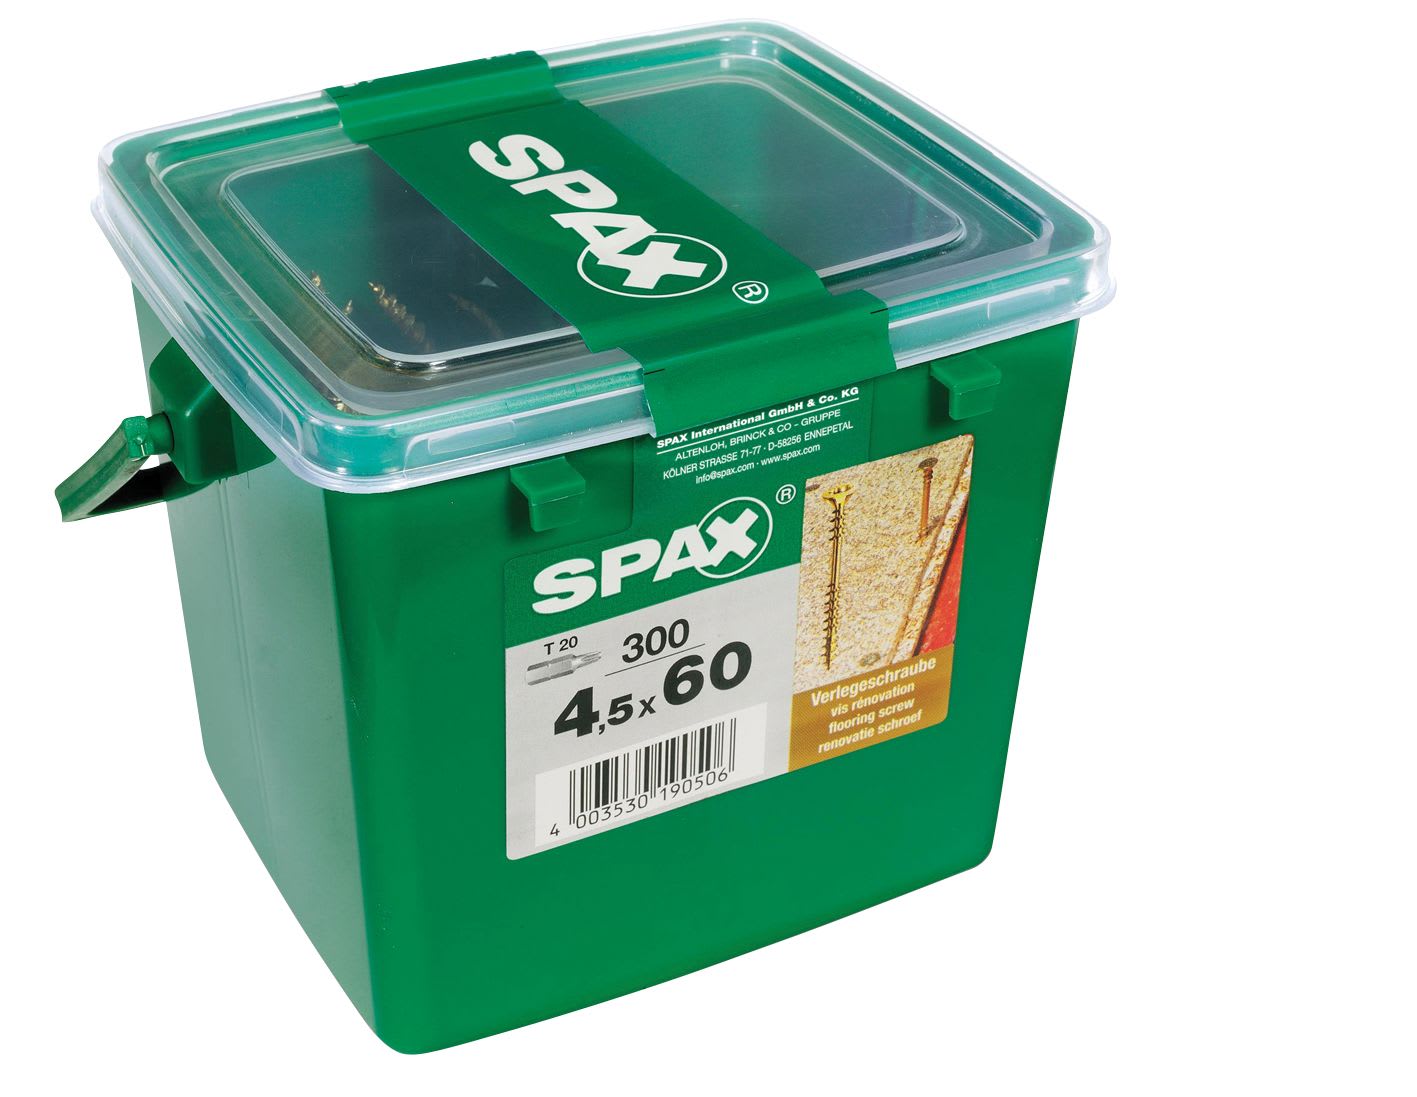 Spax Chipboard Flooring Screws - 4.5 x 60mm